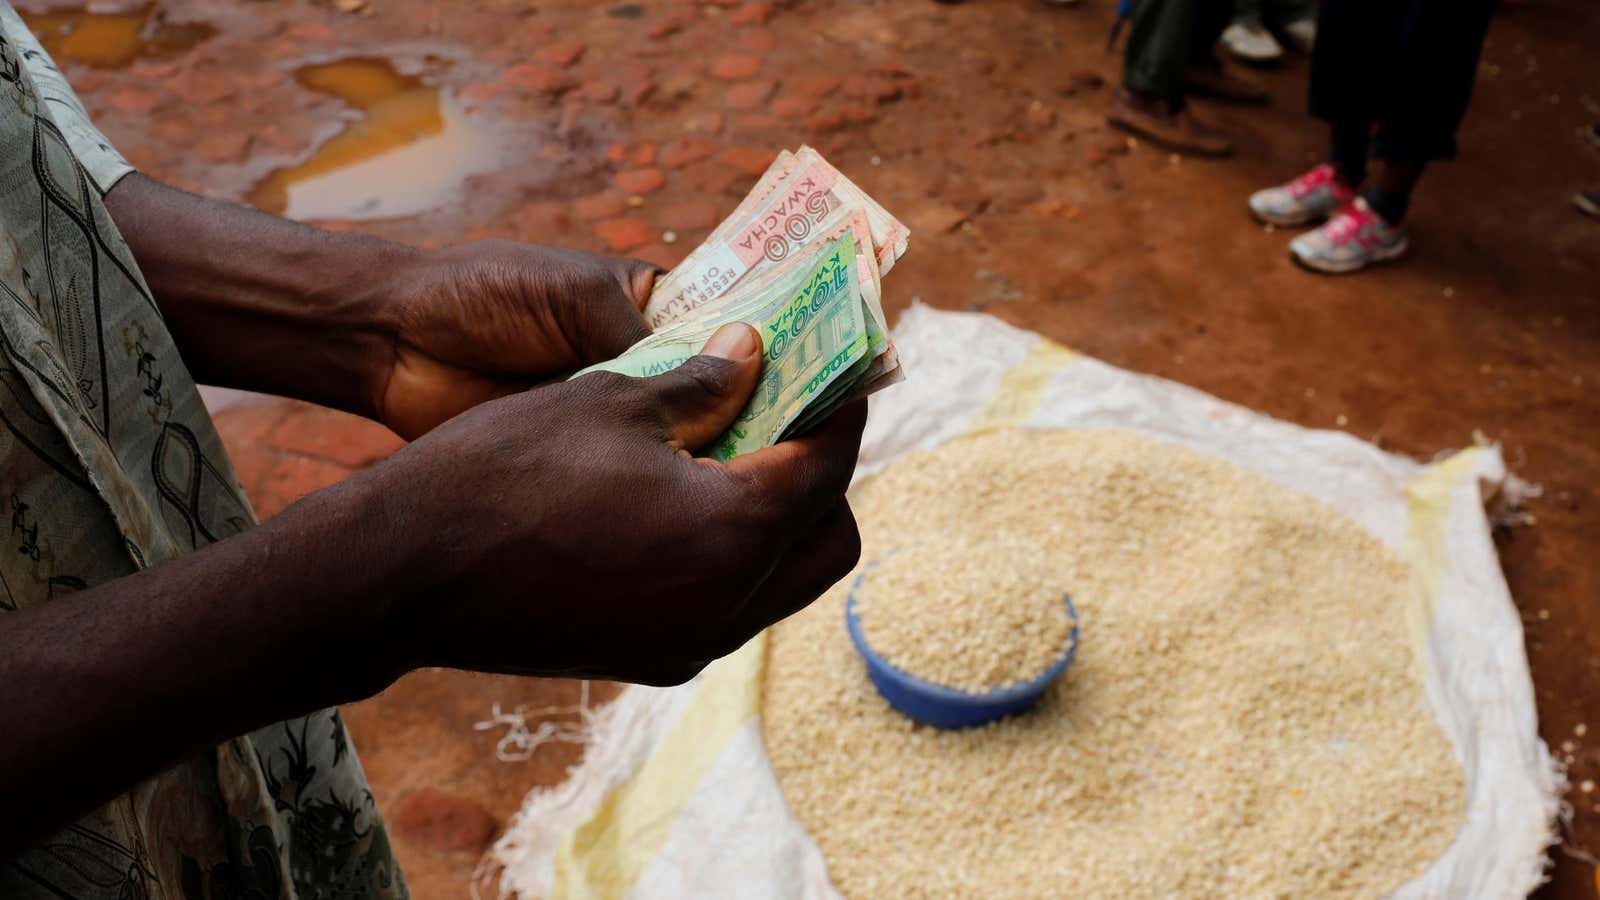 Cash still rules. A Malawian trader counts money as he sells maize near Lilongwe, Malawi